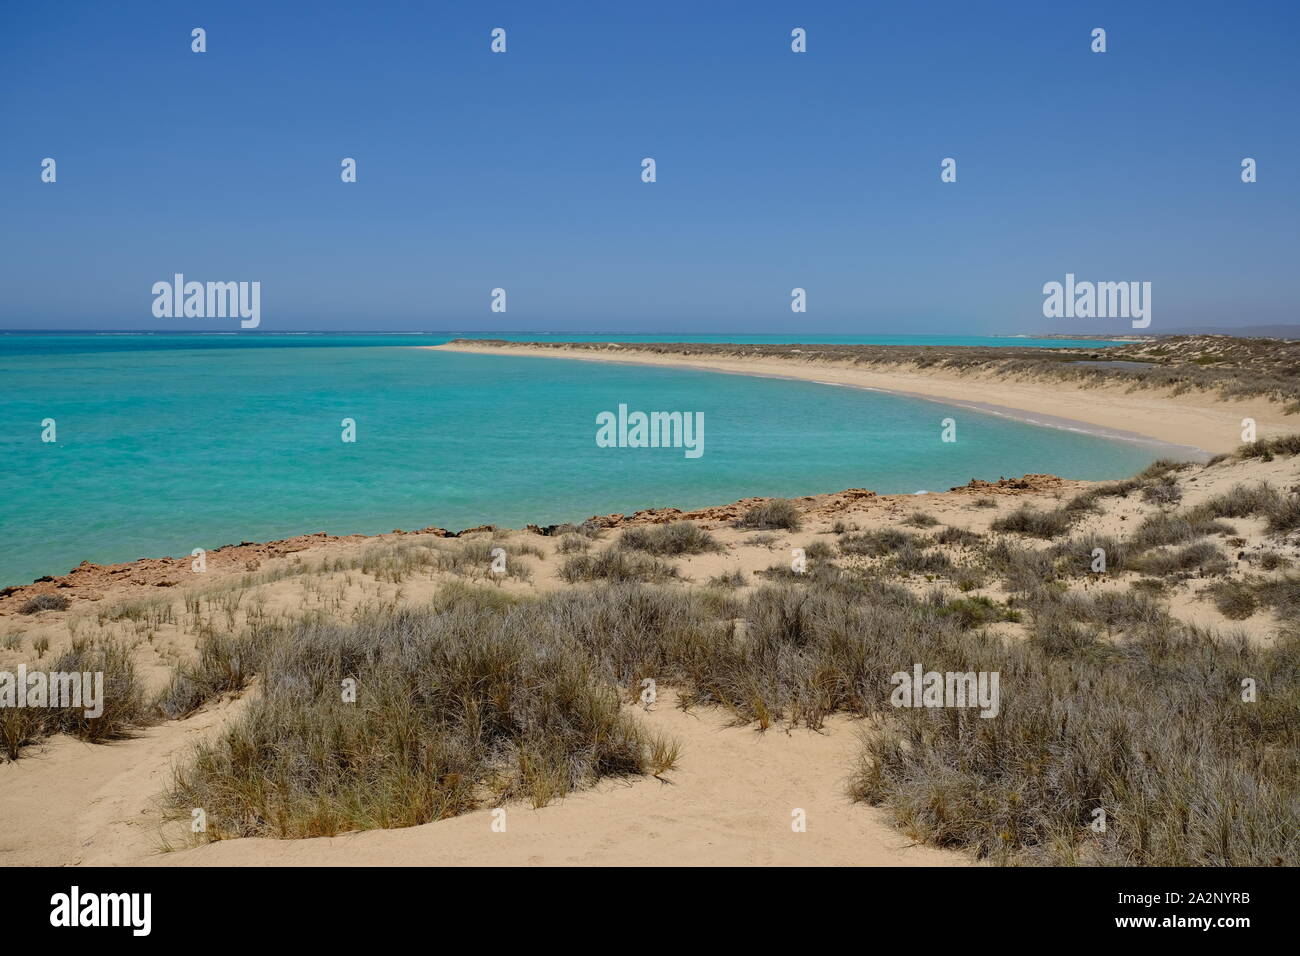 Australia Cape Jurabi Coastal Park scenic sandy coastline view Stock Photo